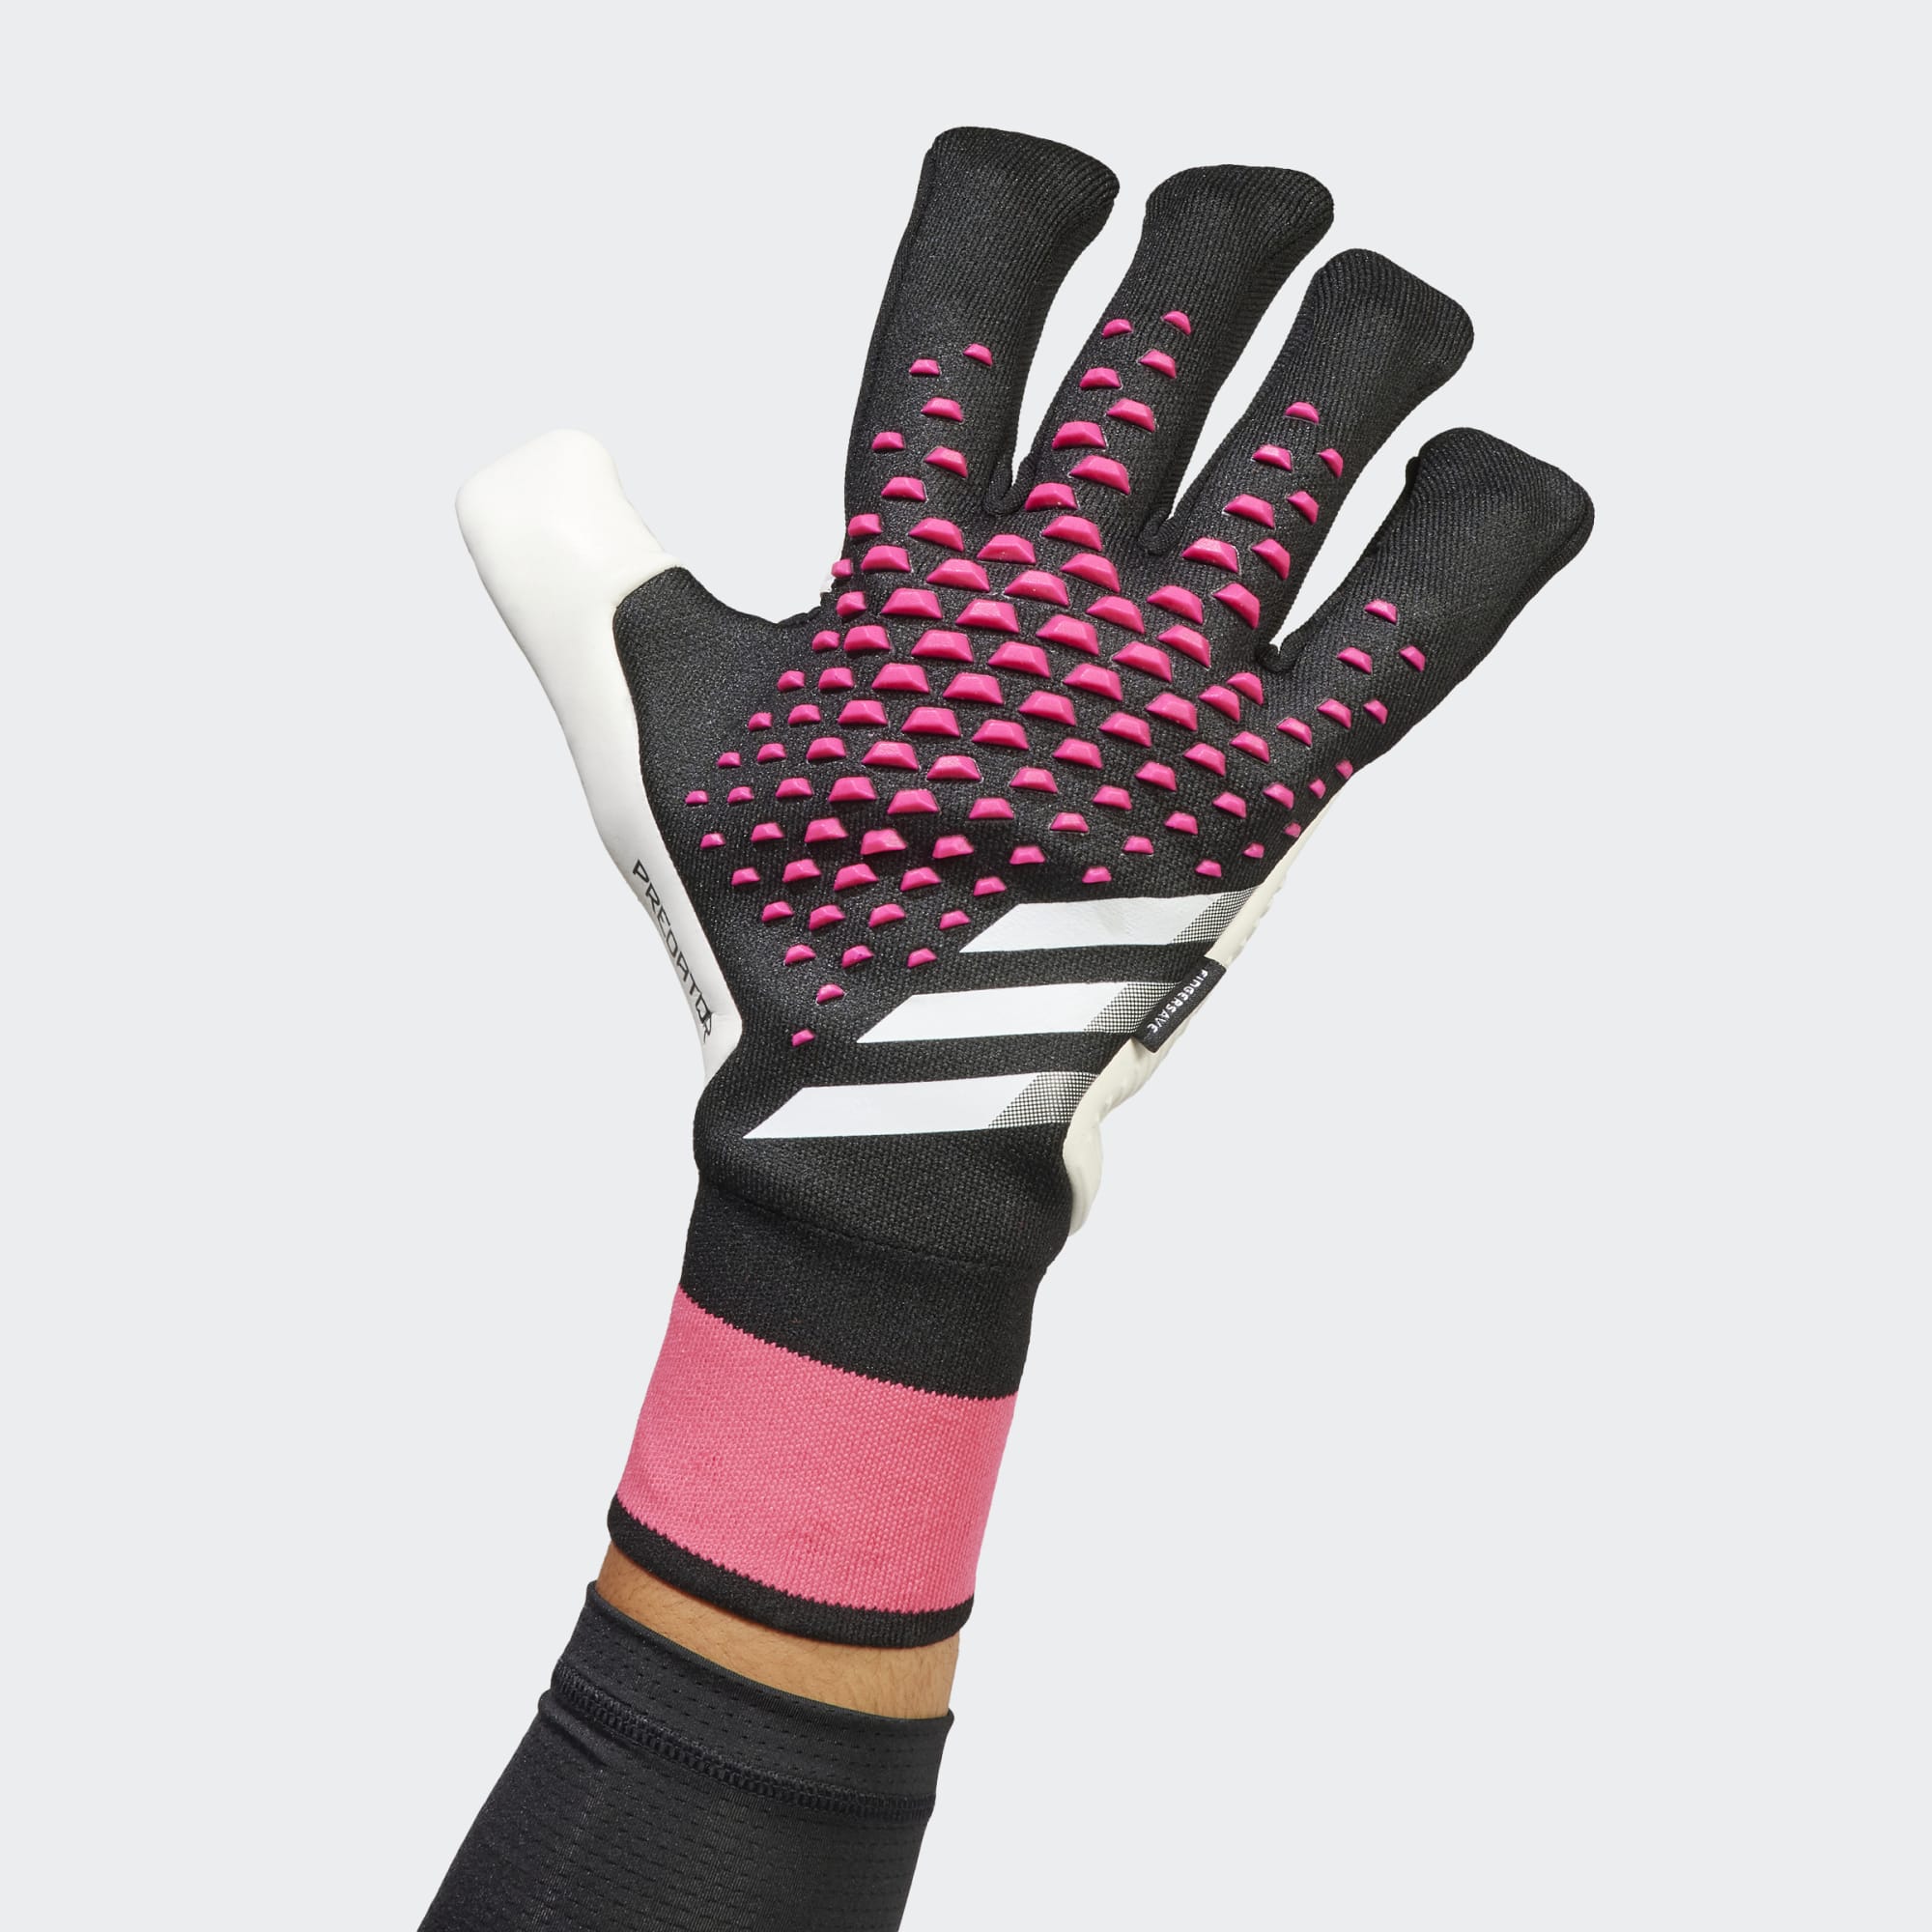 Stefans Soccer - Wisconsin - adidas Predator Pro Finger Save GK Glove - Black / White / Team Shock Pink